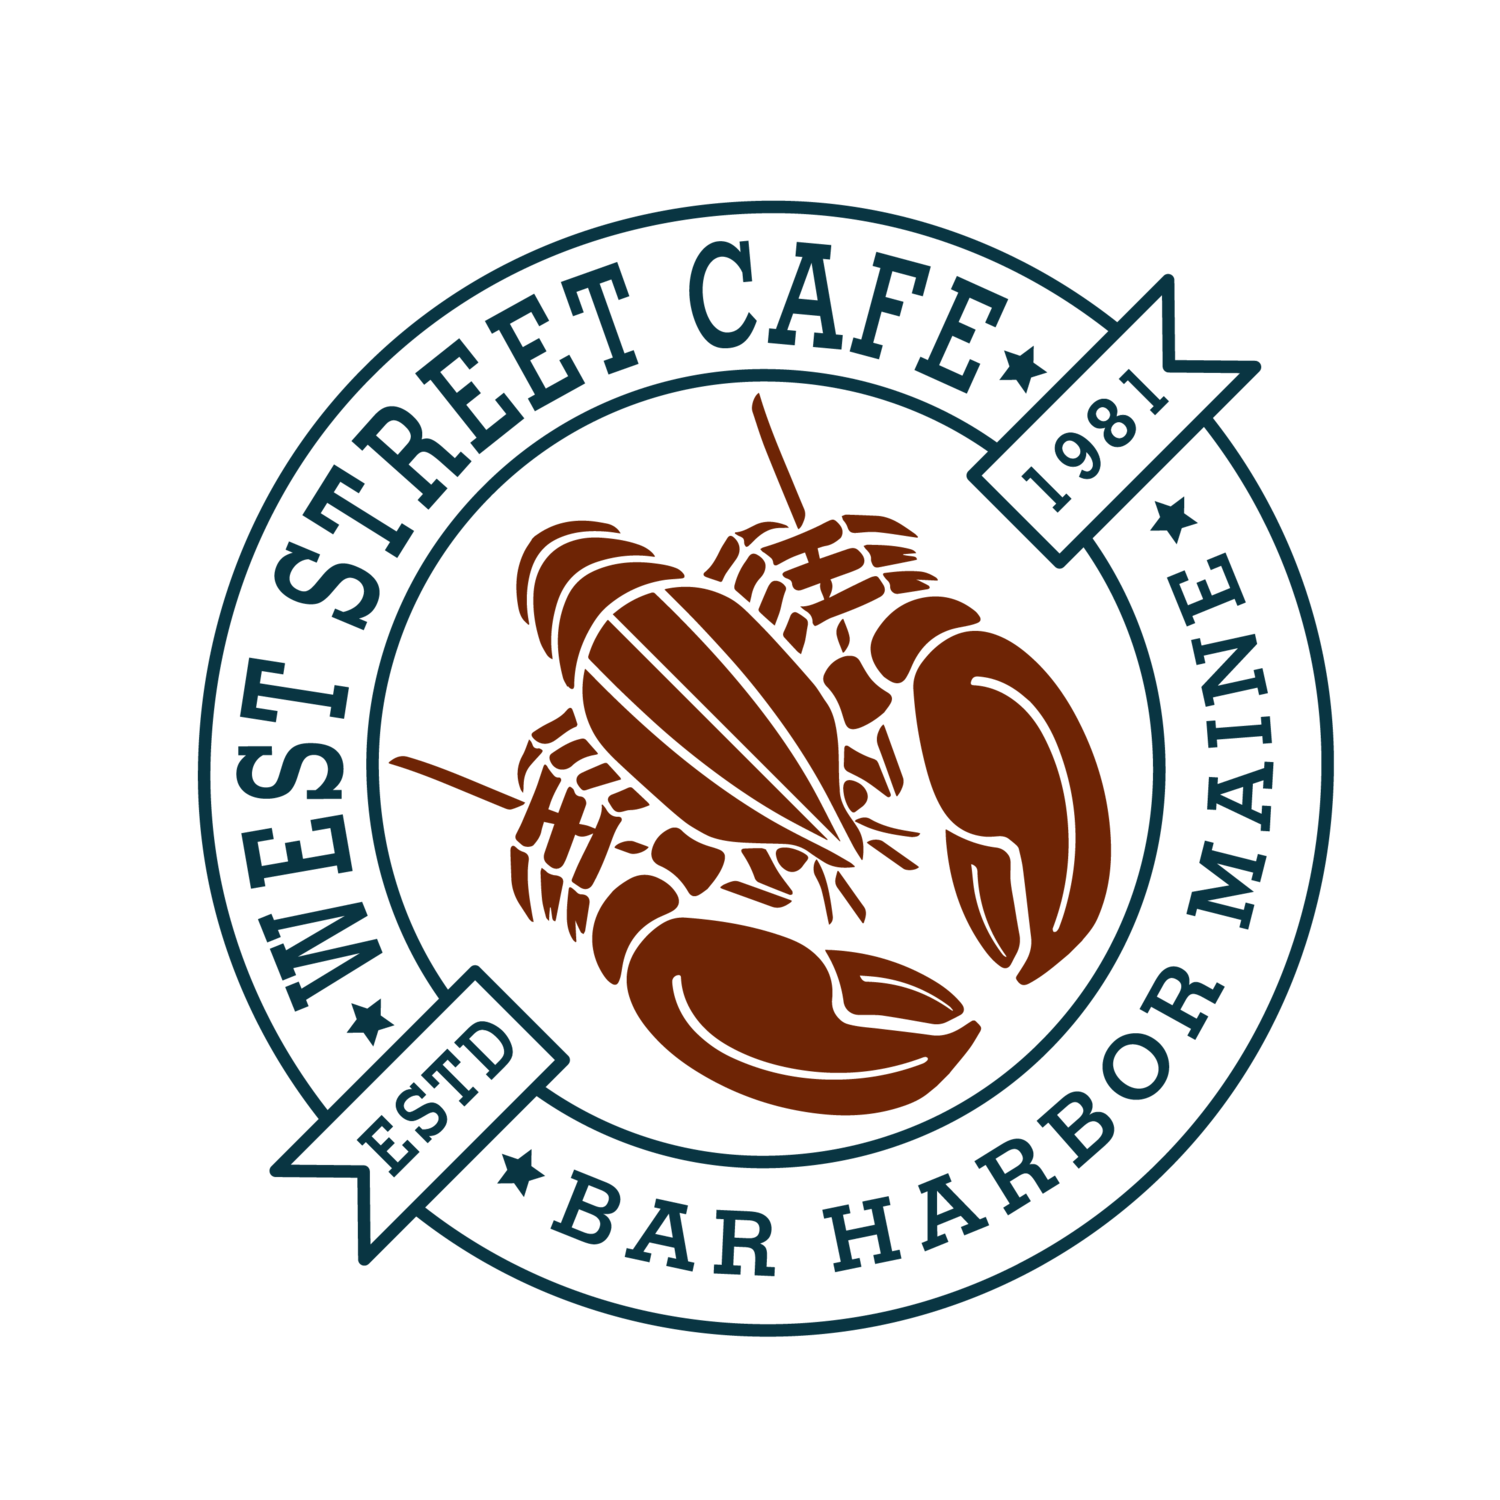 West Street Cafe